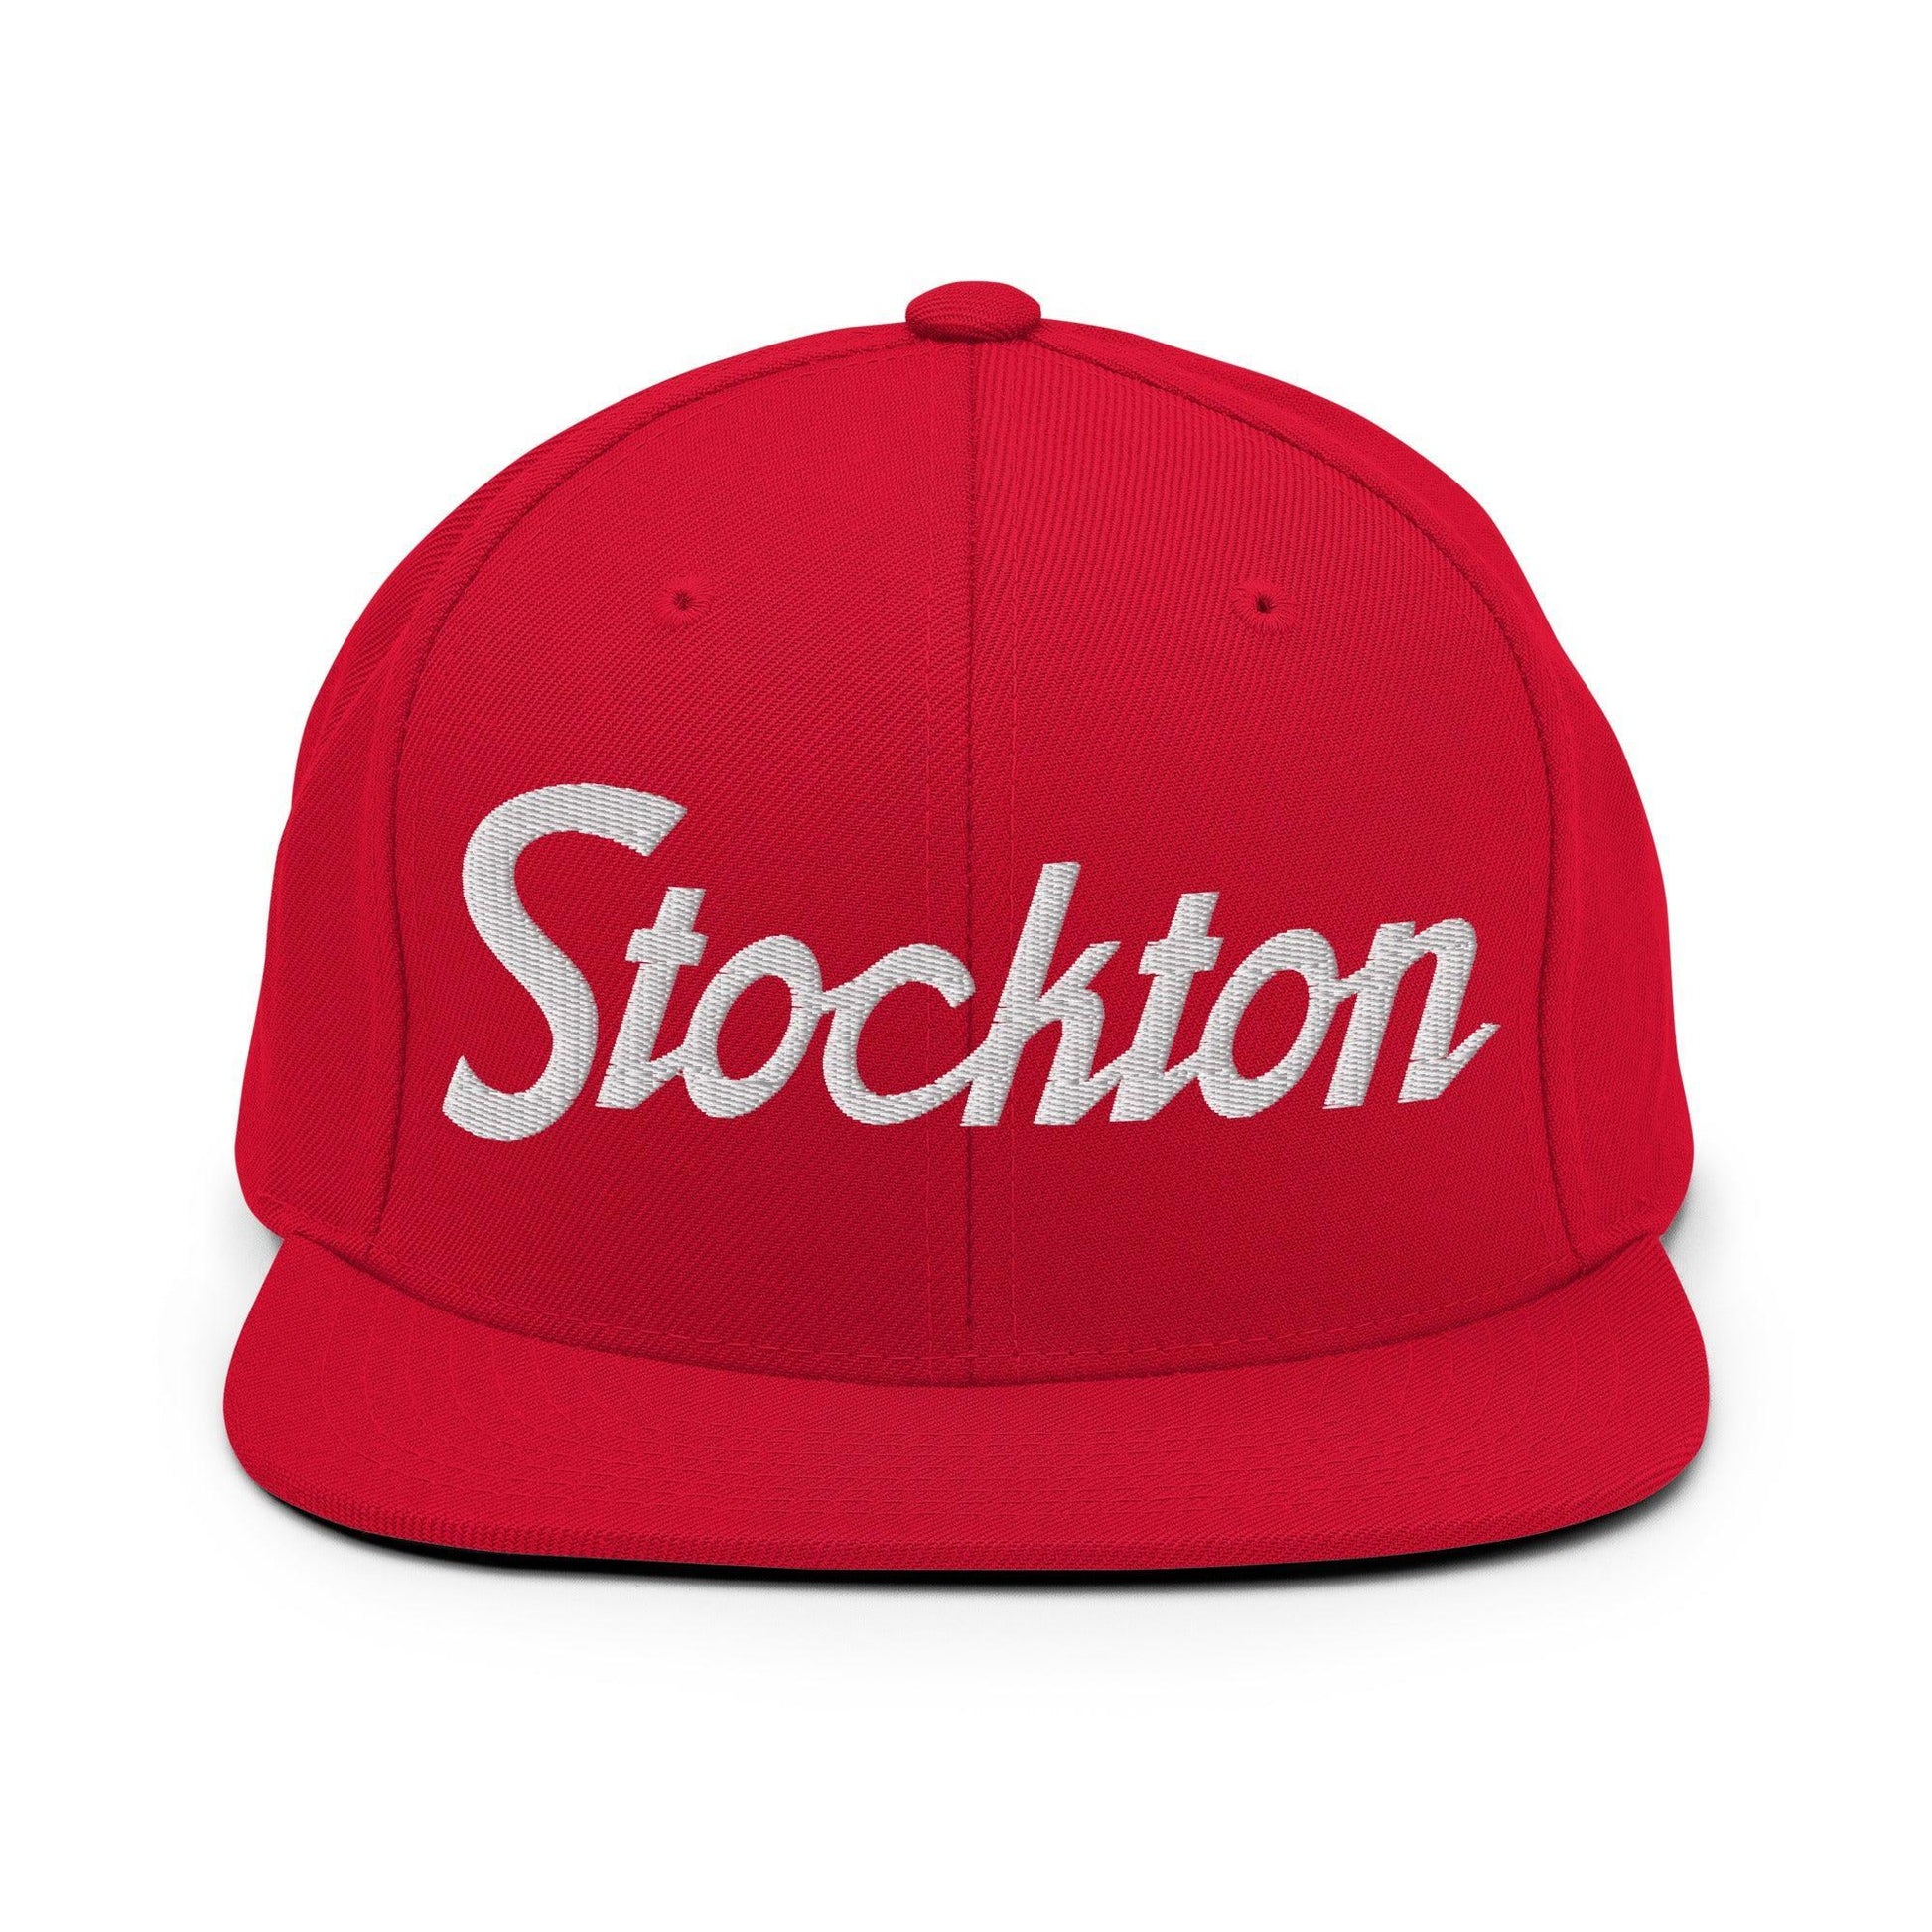 Stockton Script Snapback Hat Red